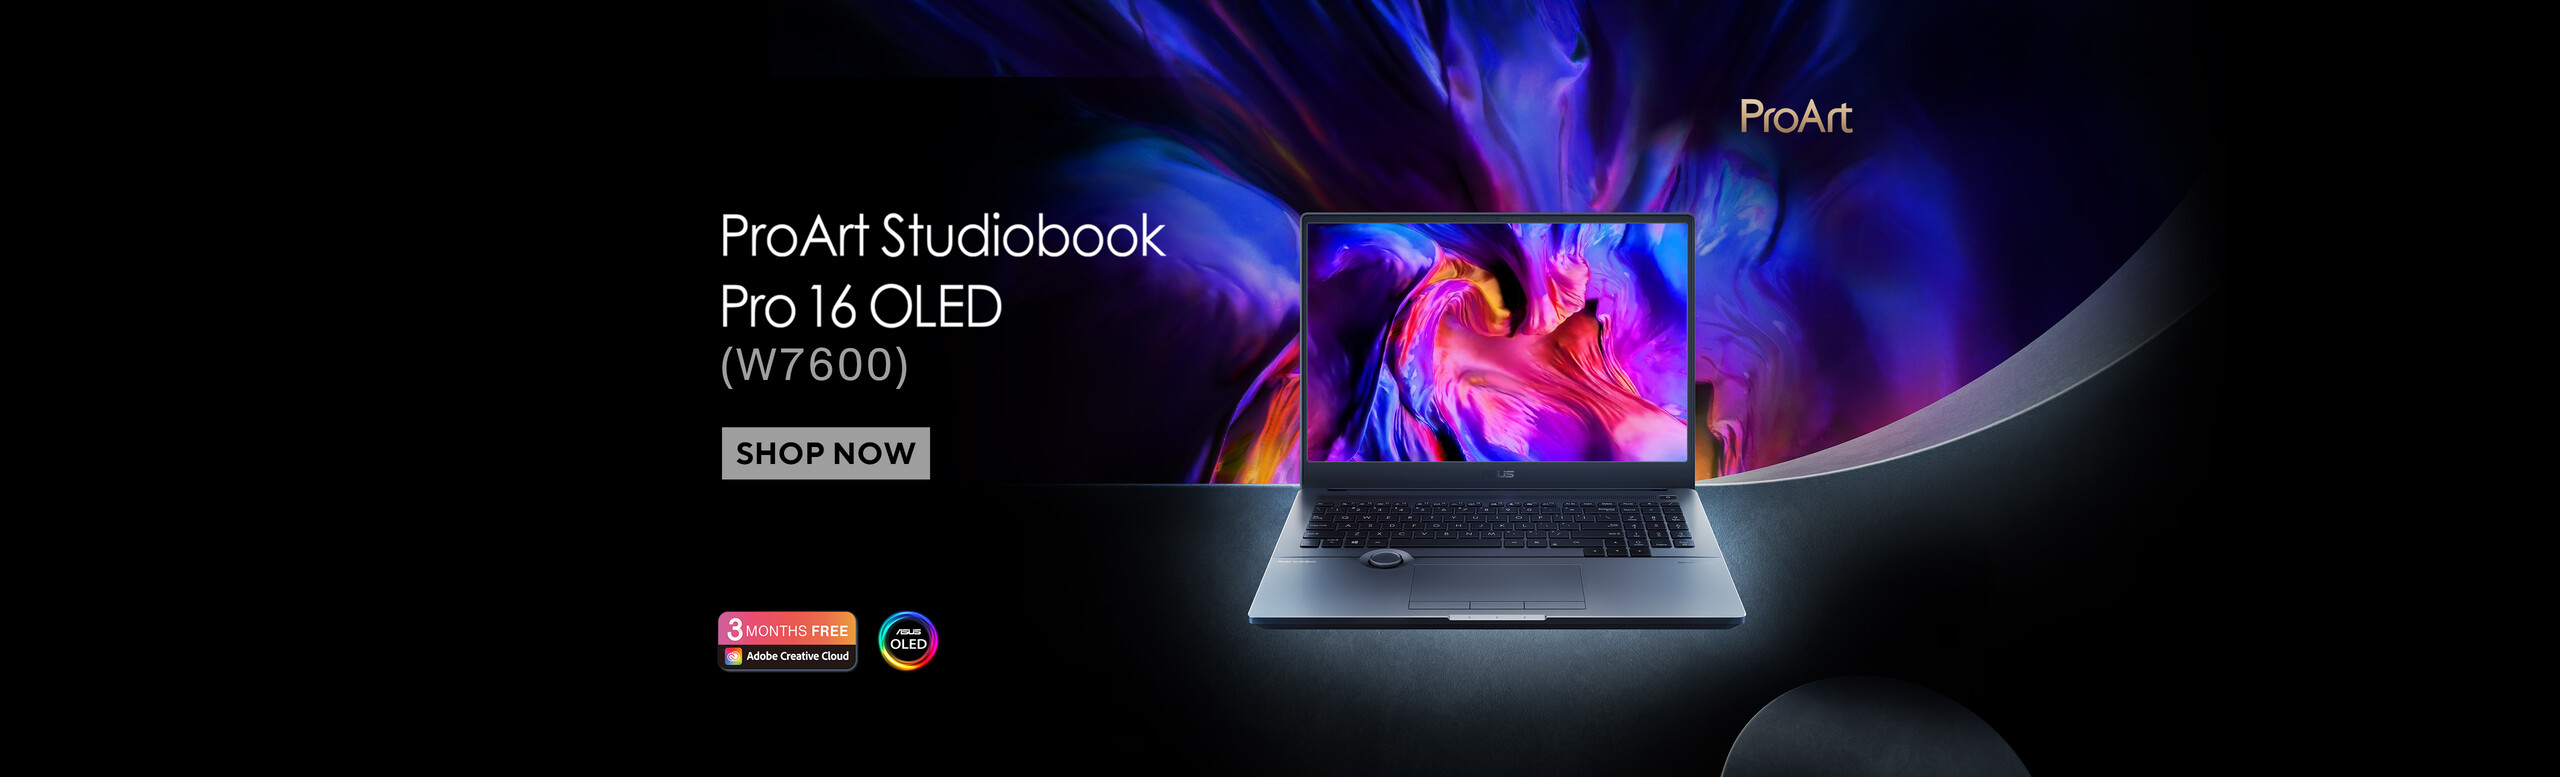 Asus ProArt Studiobook Pro 16 OLED (W7600)